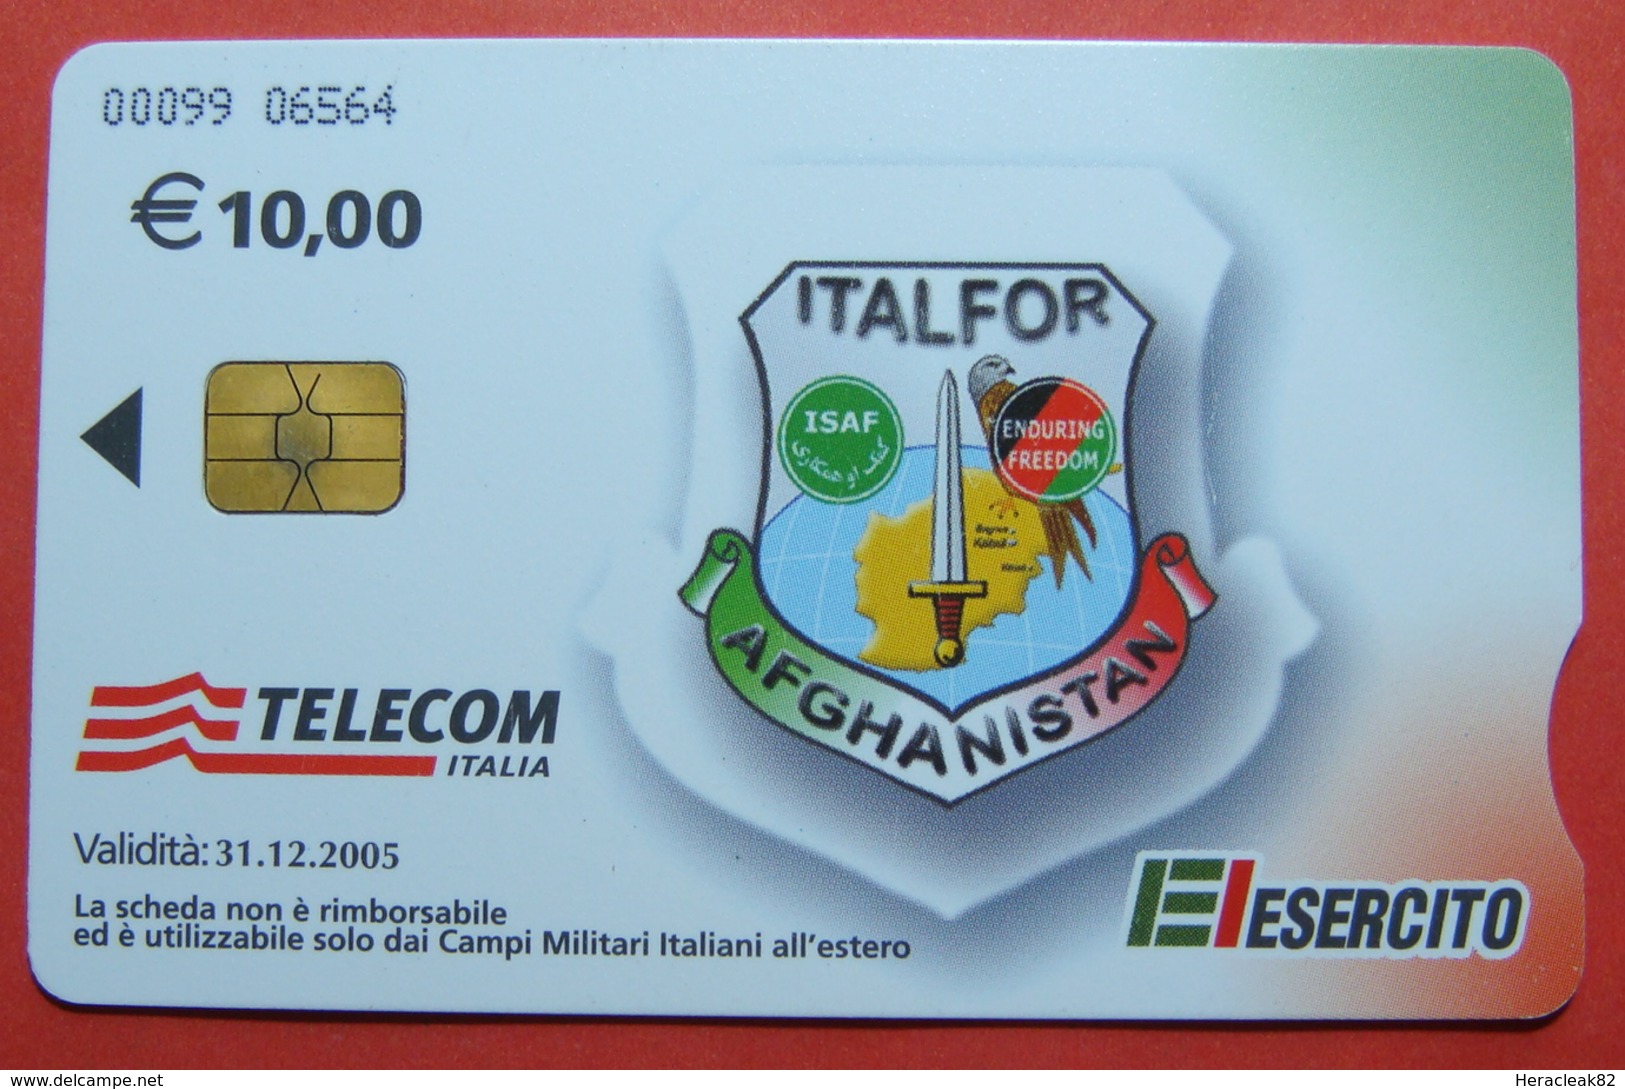 KFOR-NATO Kosovo Italian Army In AFGHANISTAN CHIP Phonecard, 10 Euro. TELECOM Italia, *ITALFOR* # 00099 06564 RRRRRR - Afghanistan